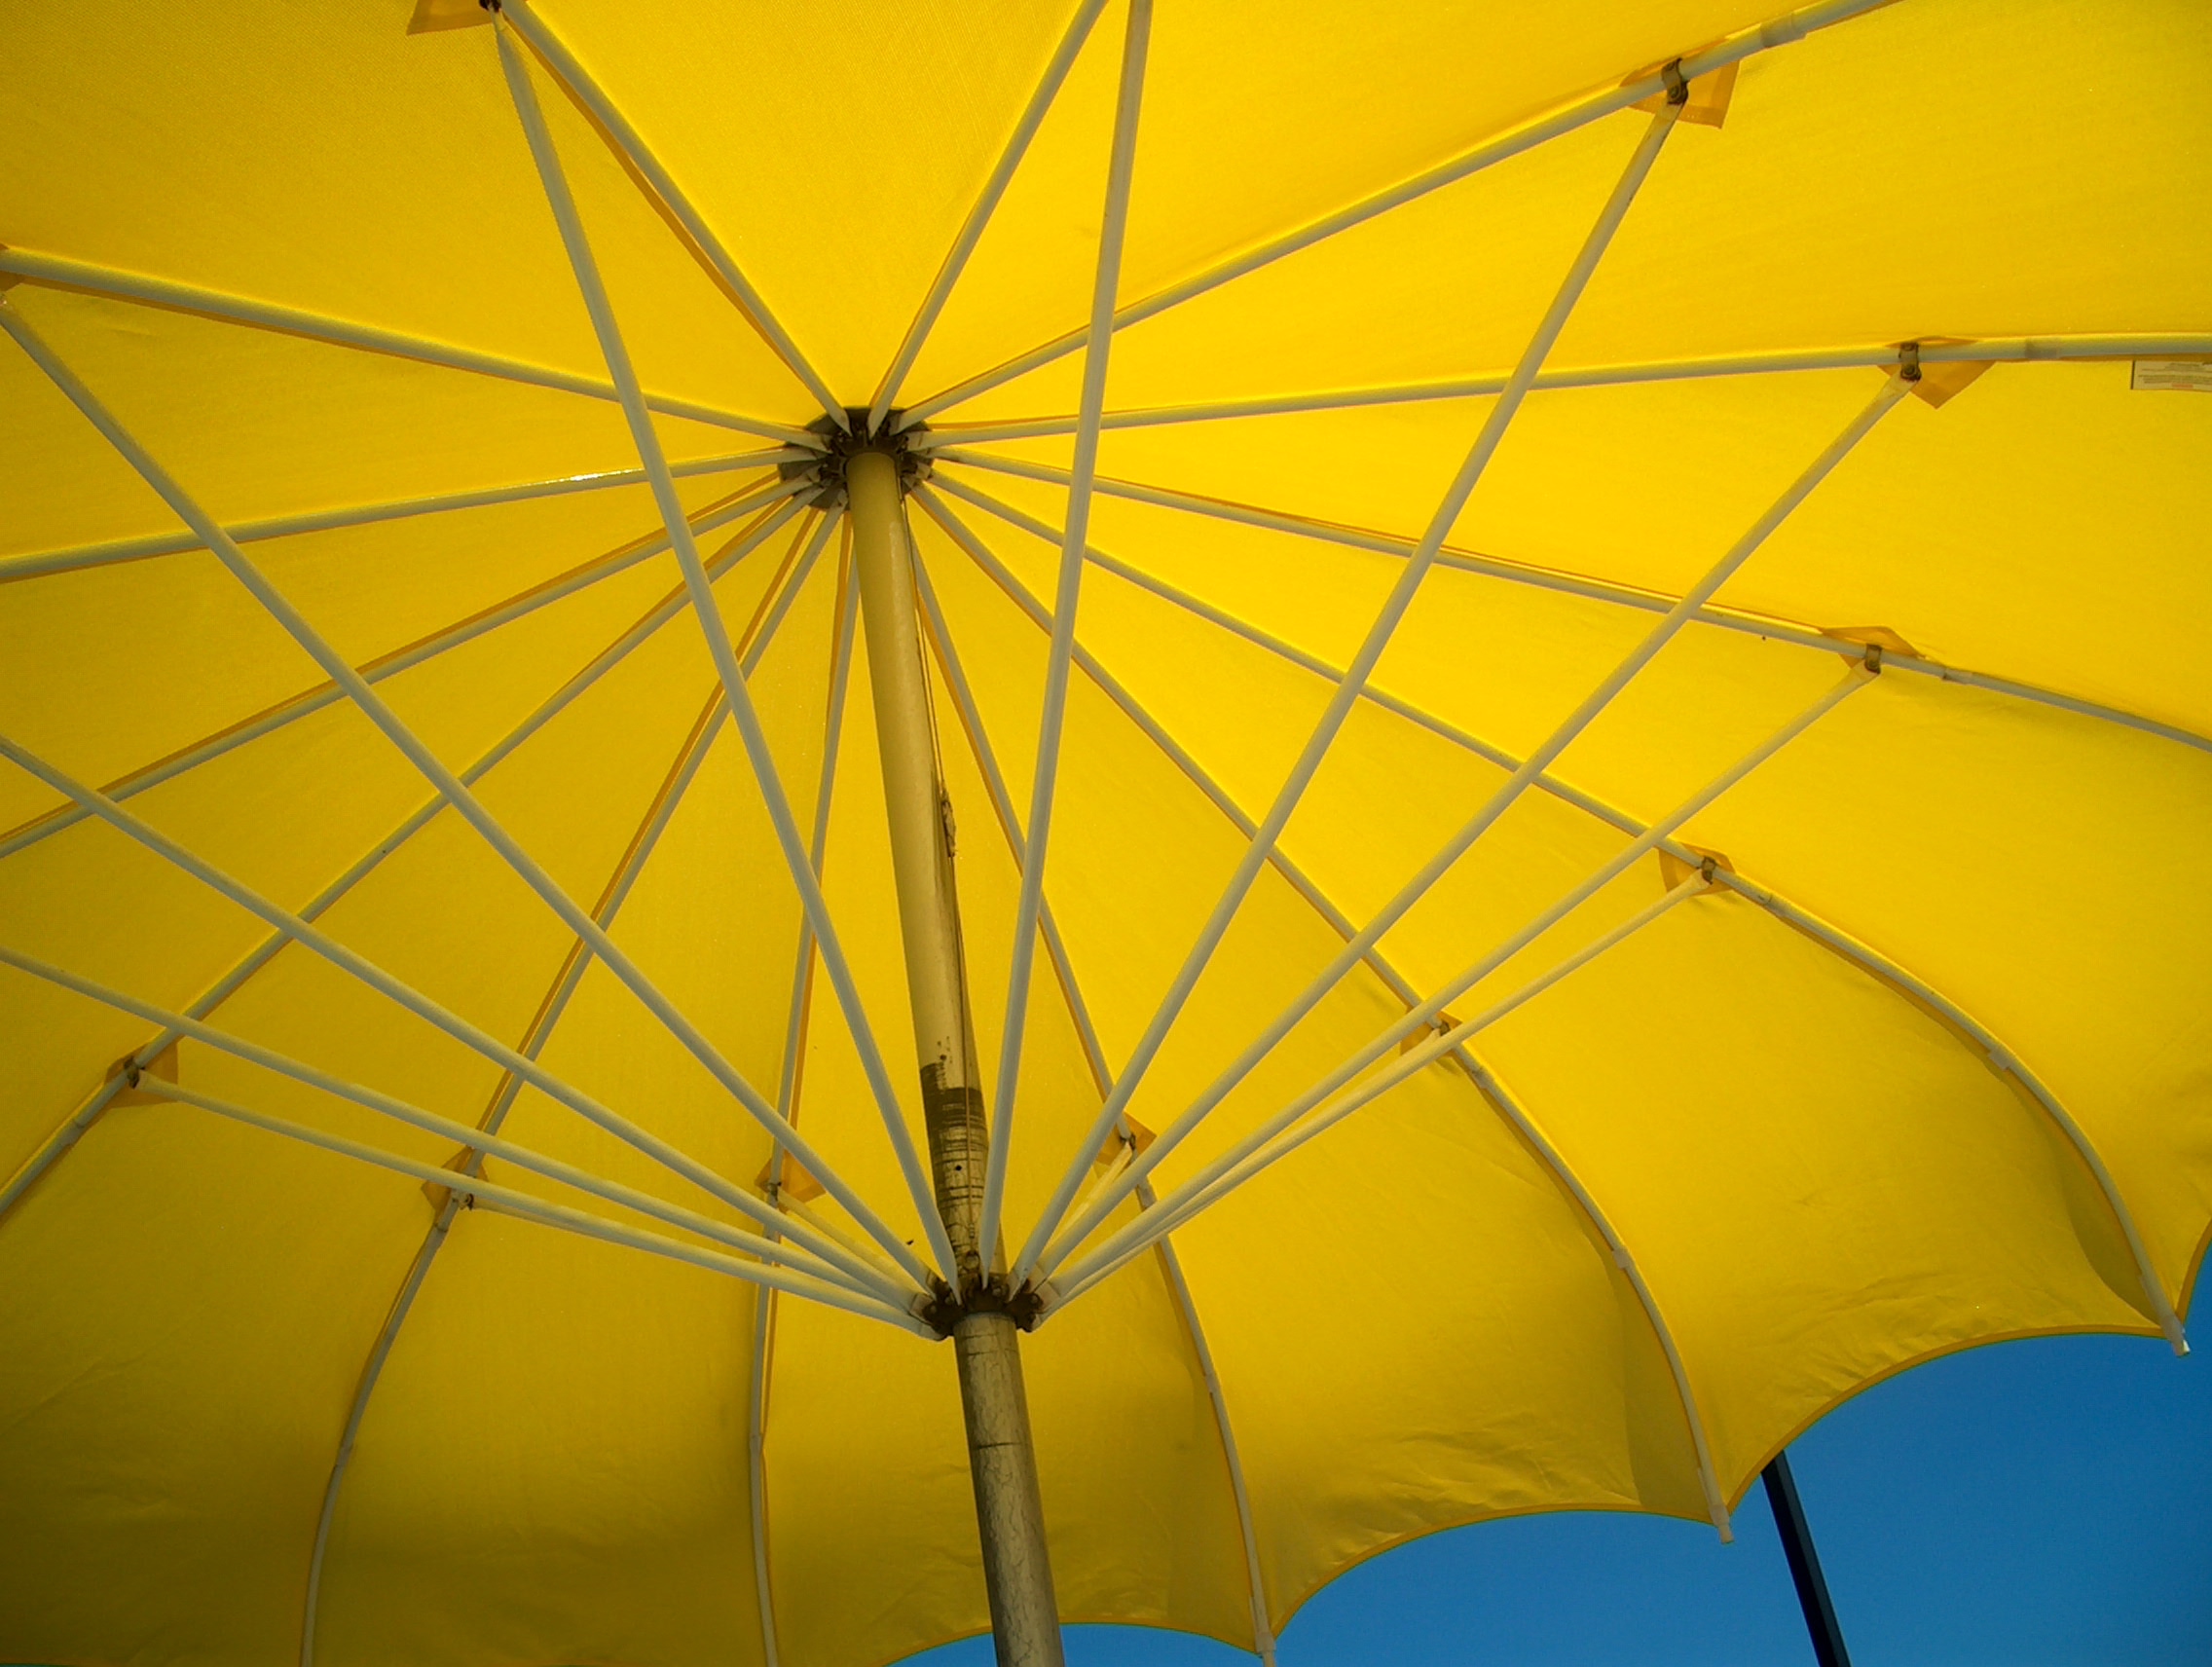 File:Yellow umbrella.jpg - Wikimedia Commons